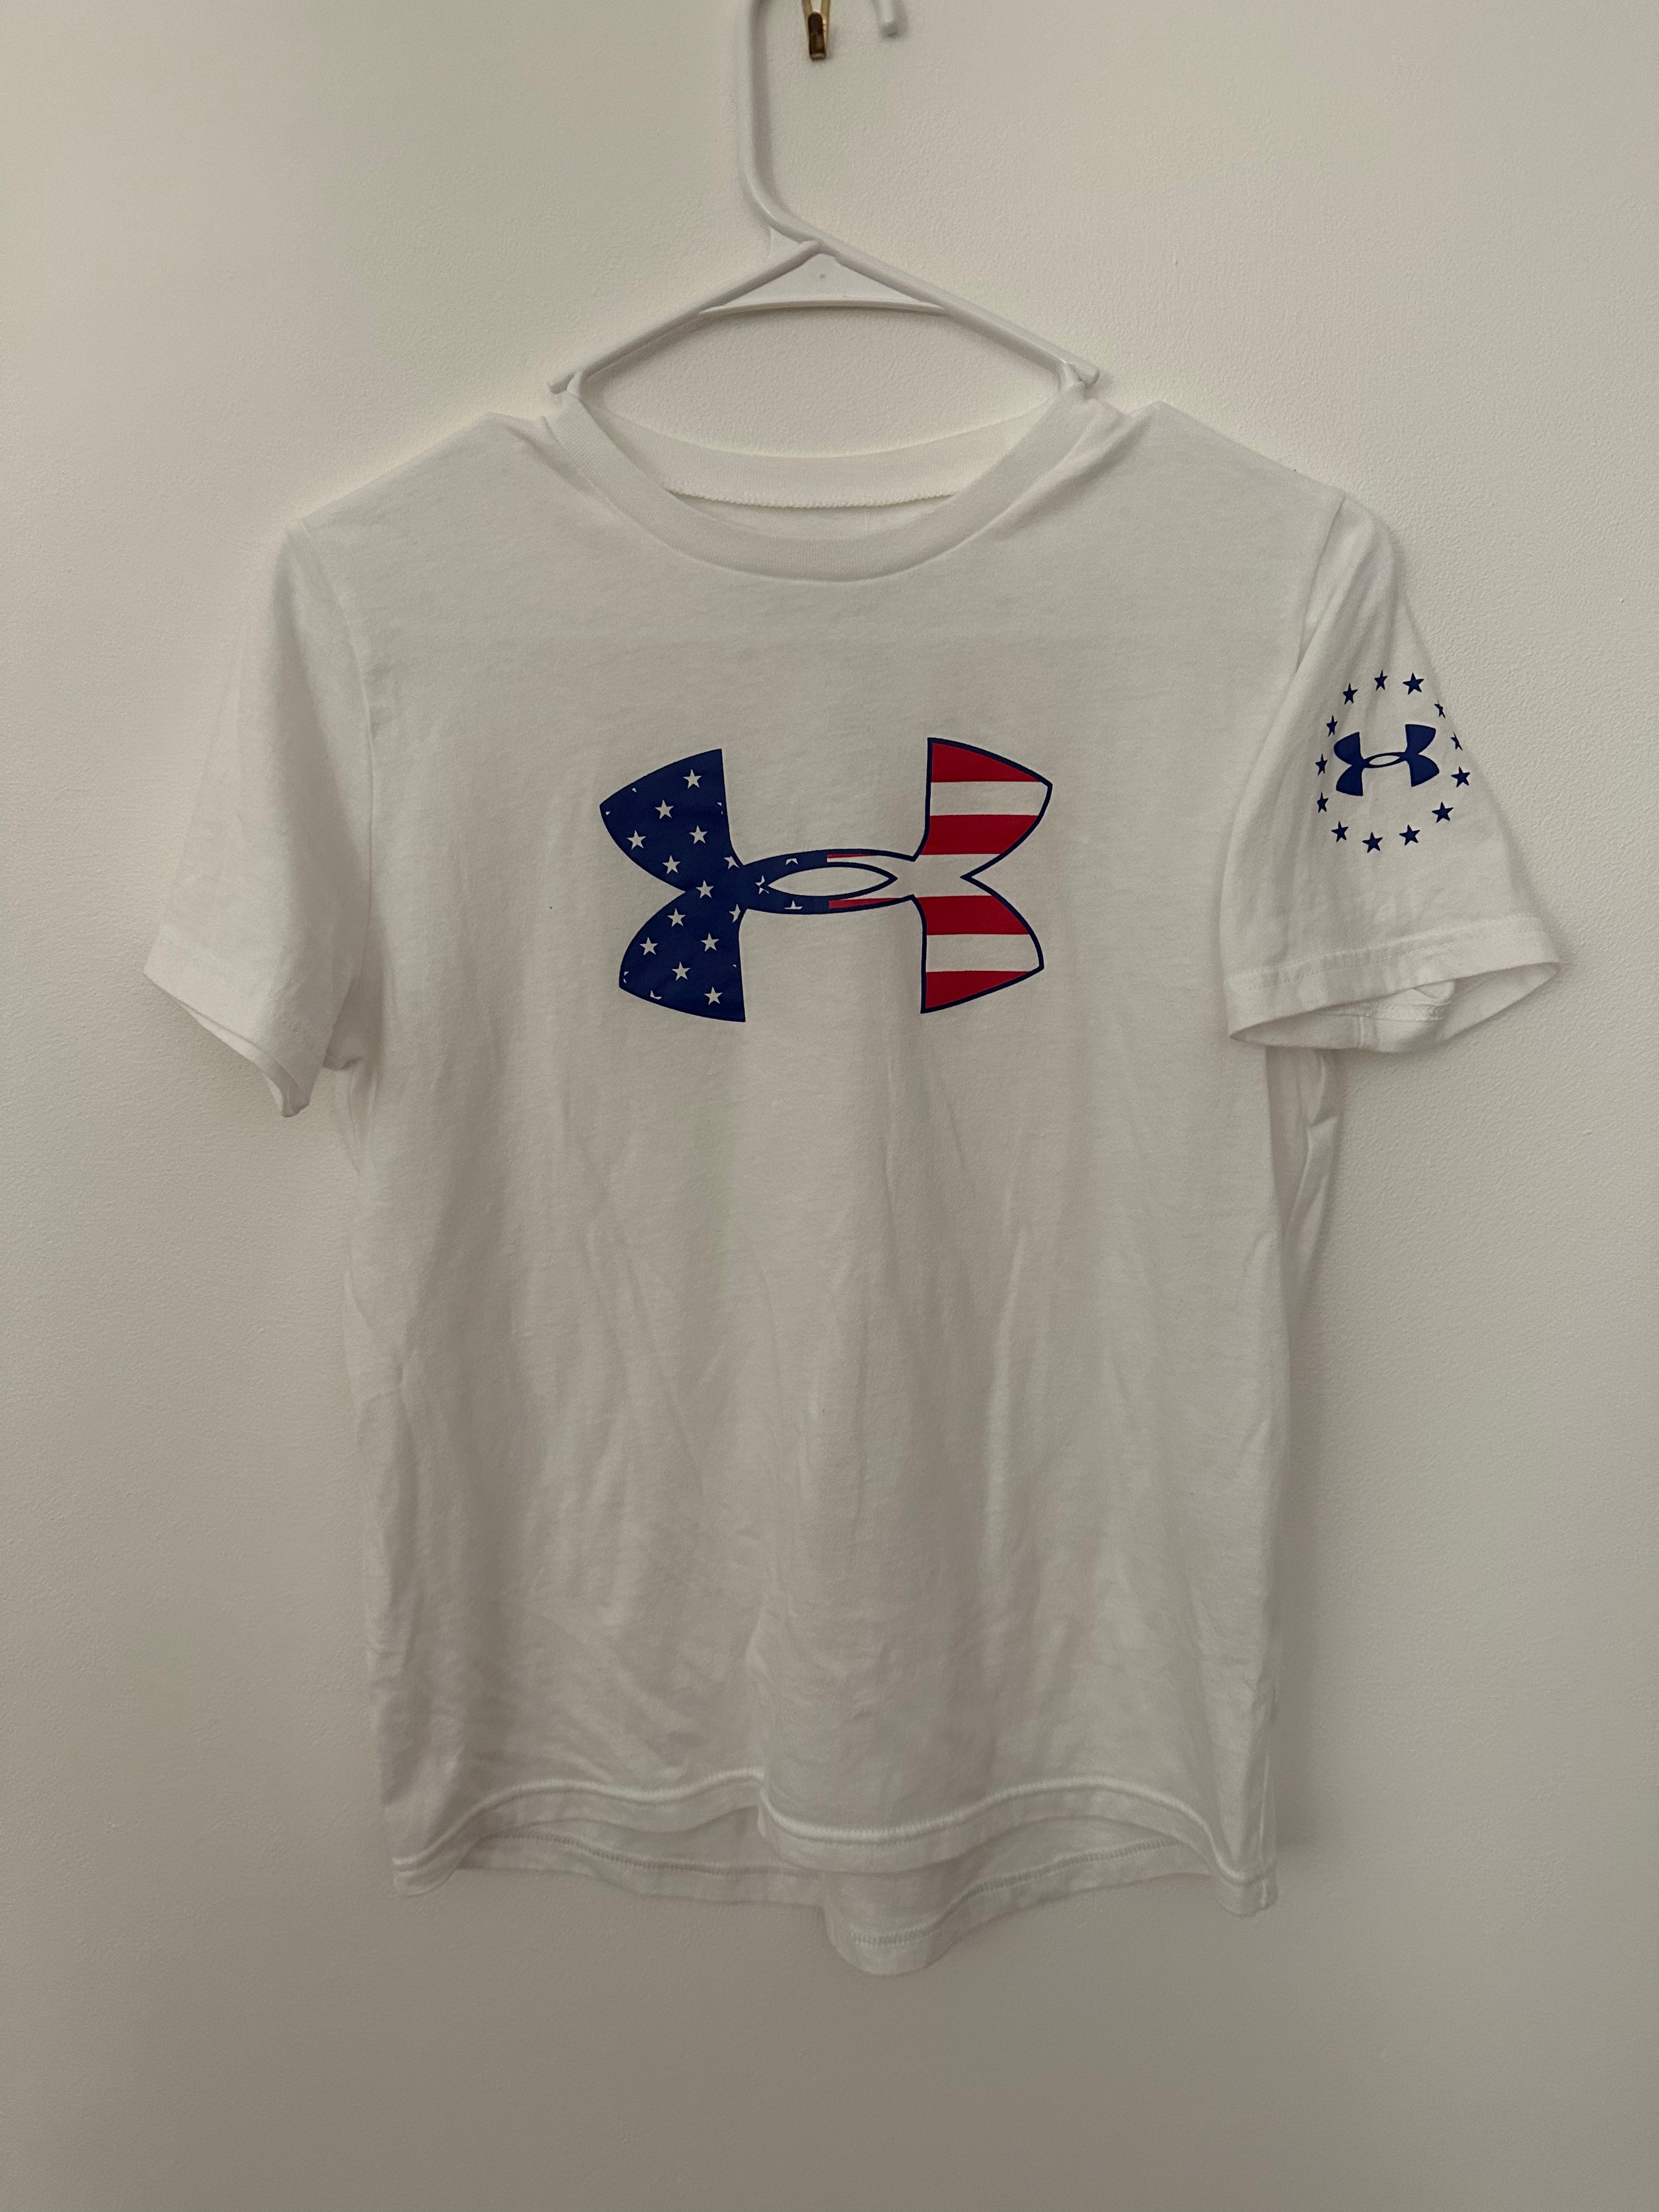 Under Armour USA Shirt, White Boys Size L